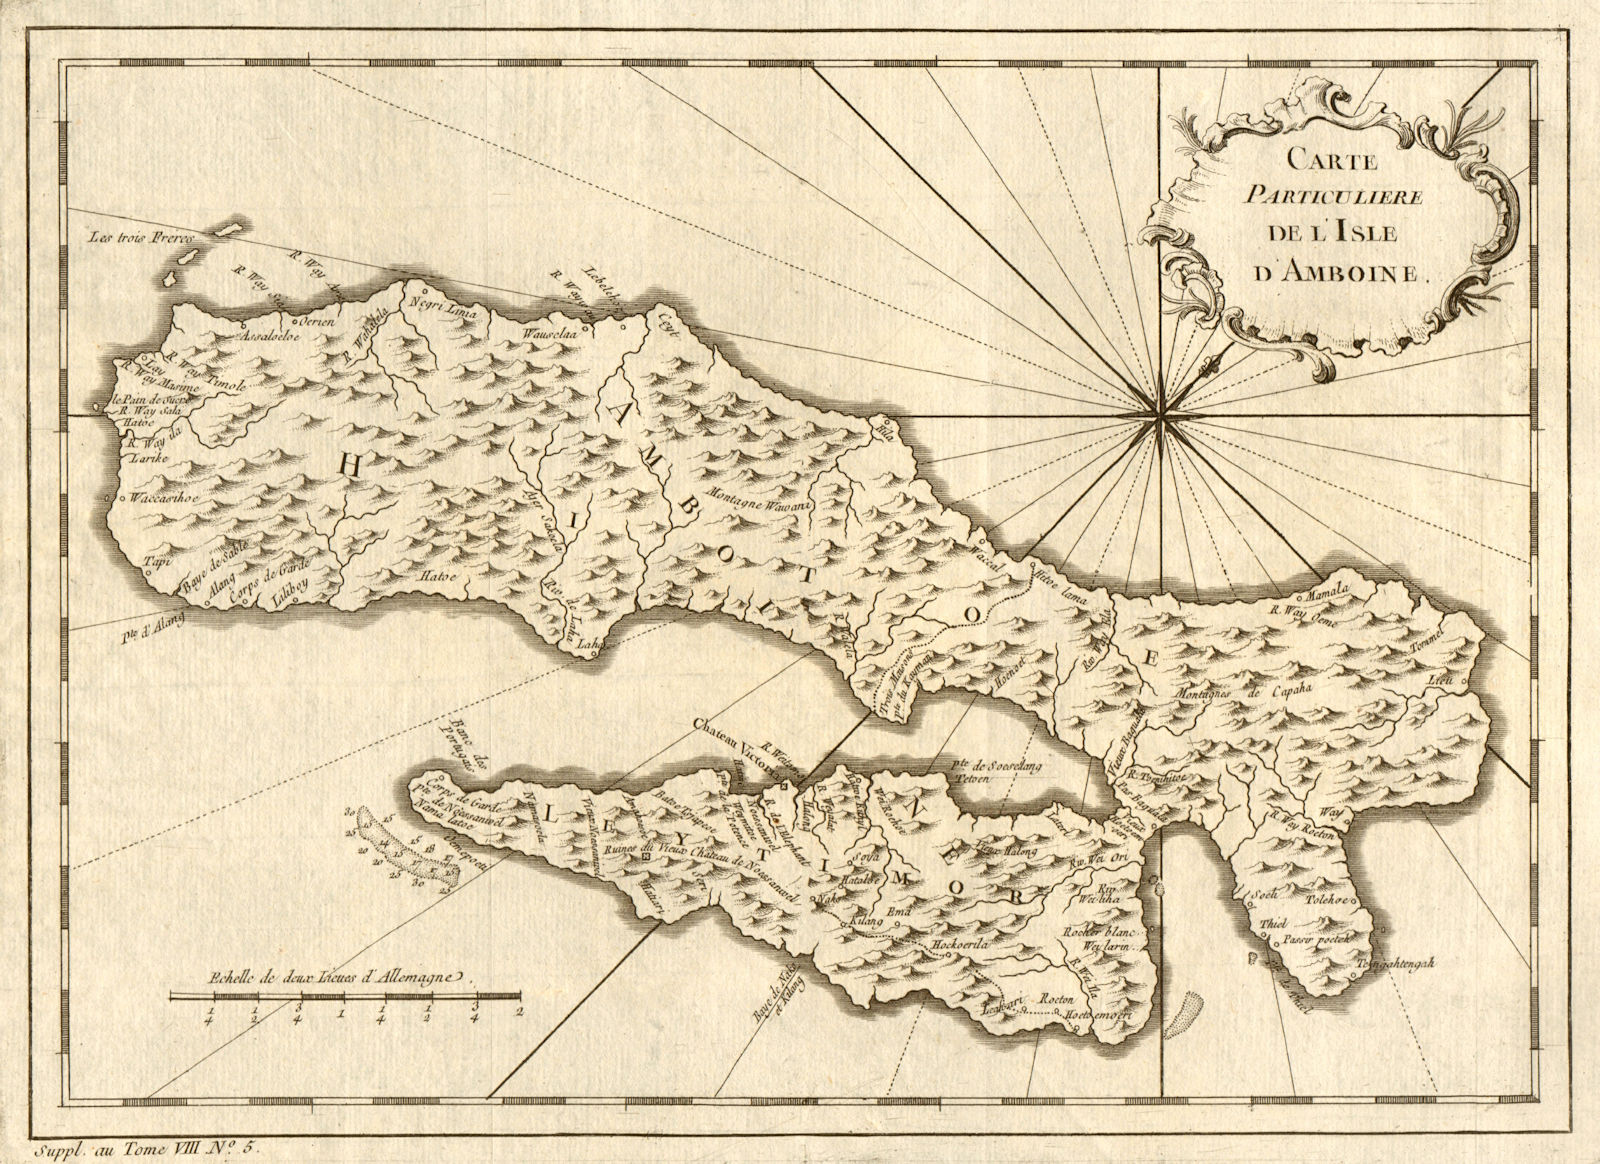 Associate Product 'Carte particulière de I’lsle d’Amboine'. Ambon, Maluku islands. BELLIN 1761 map